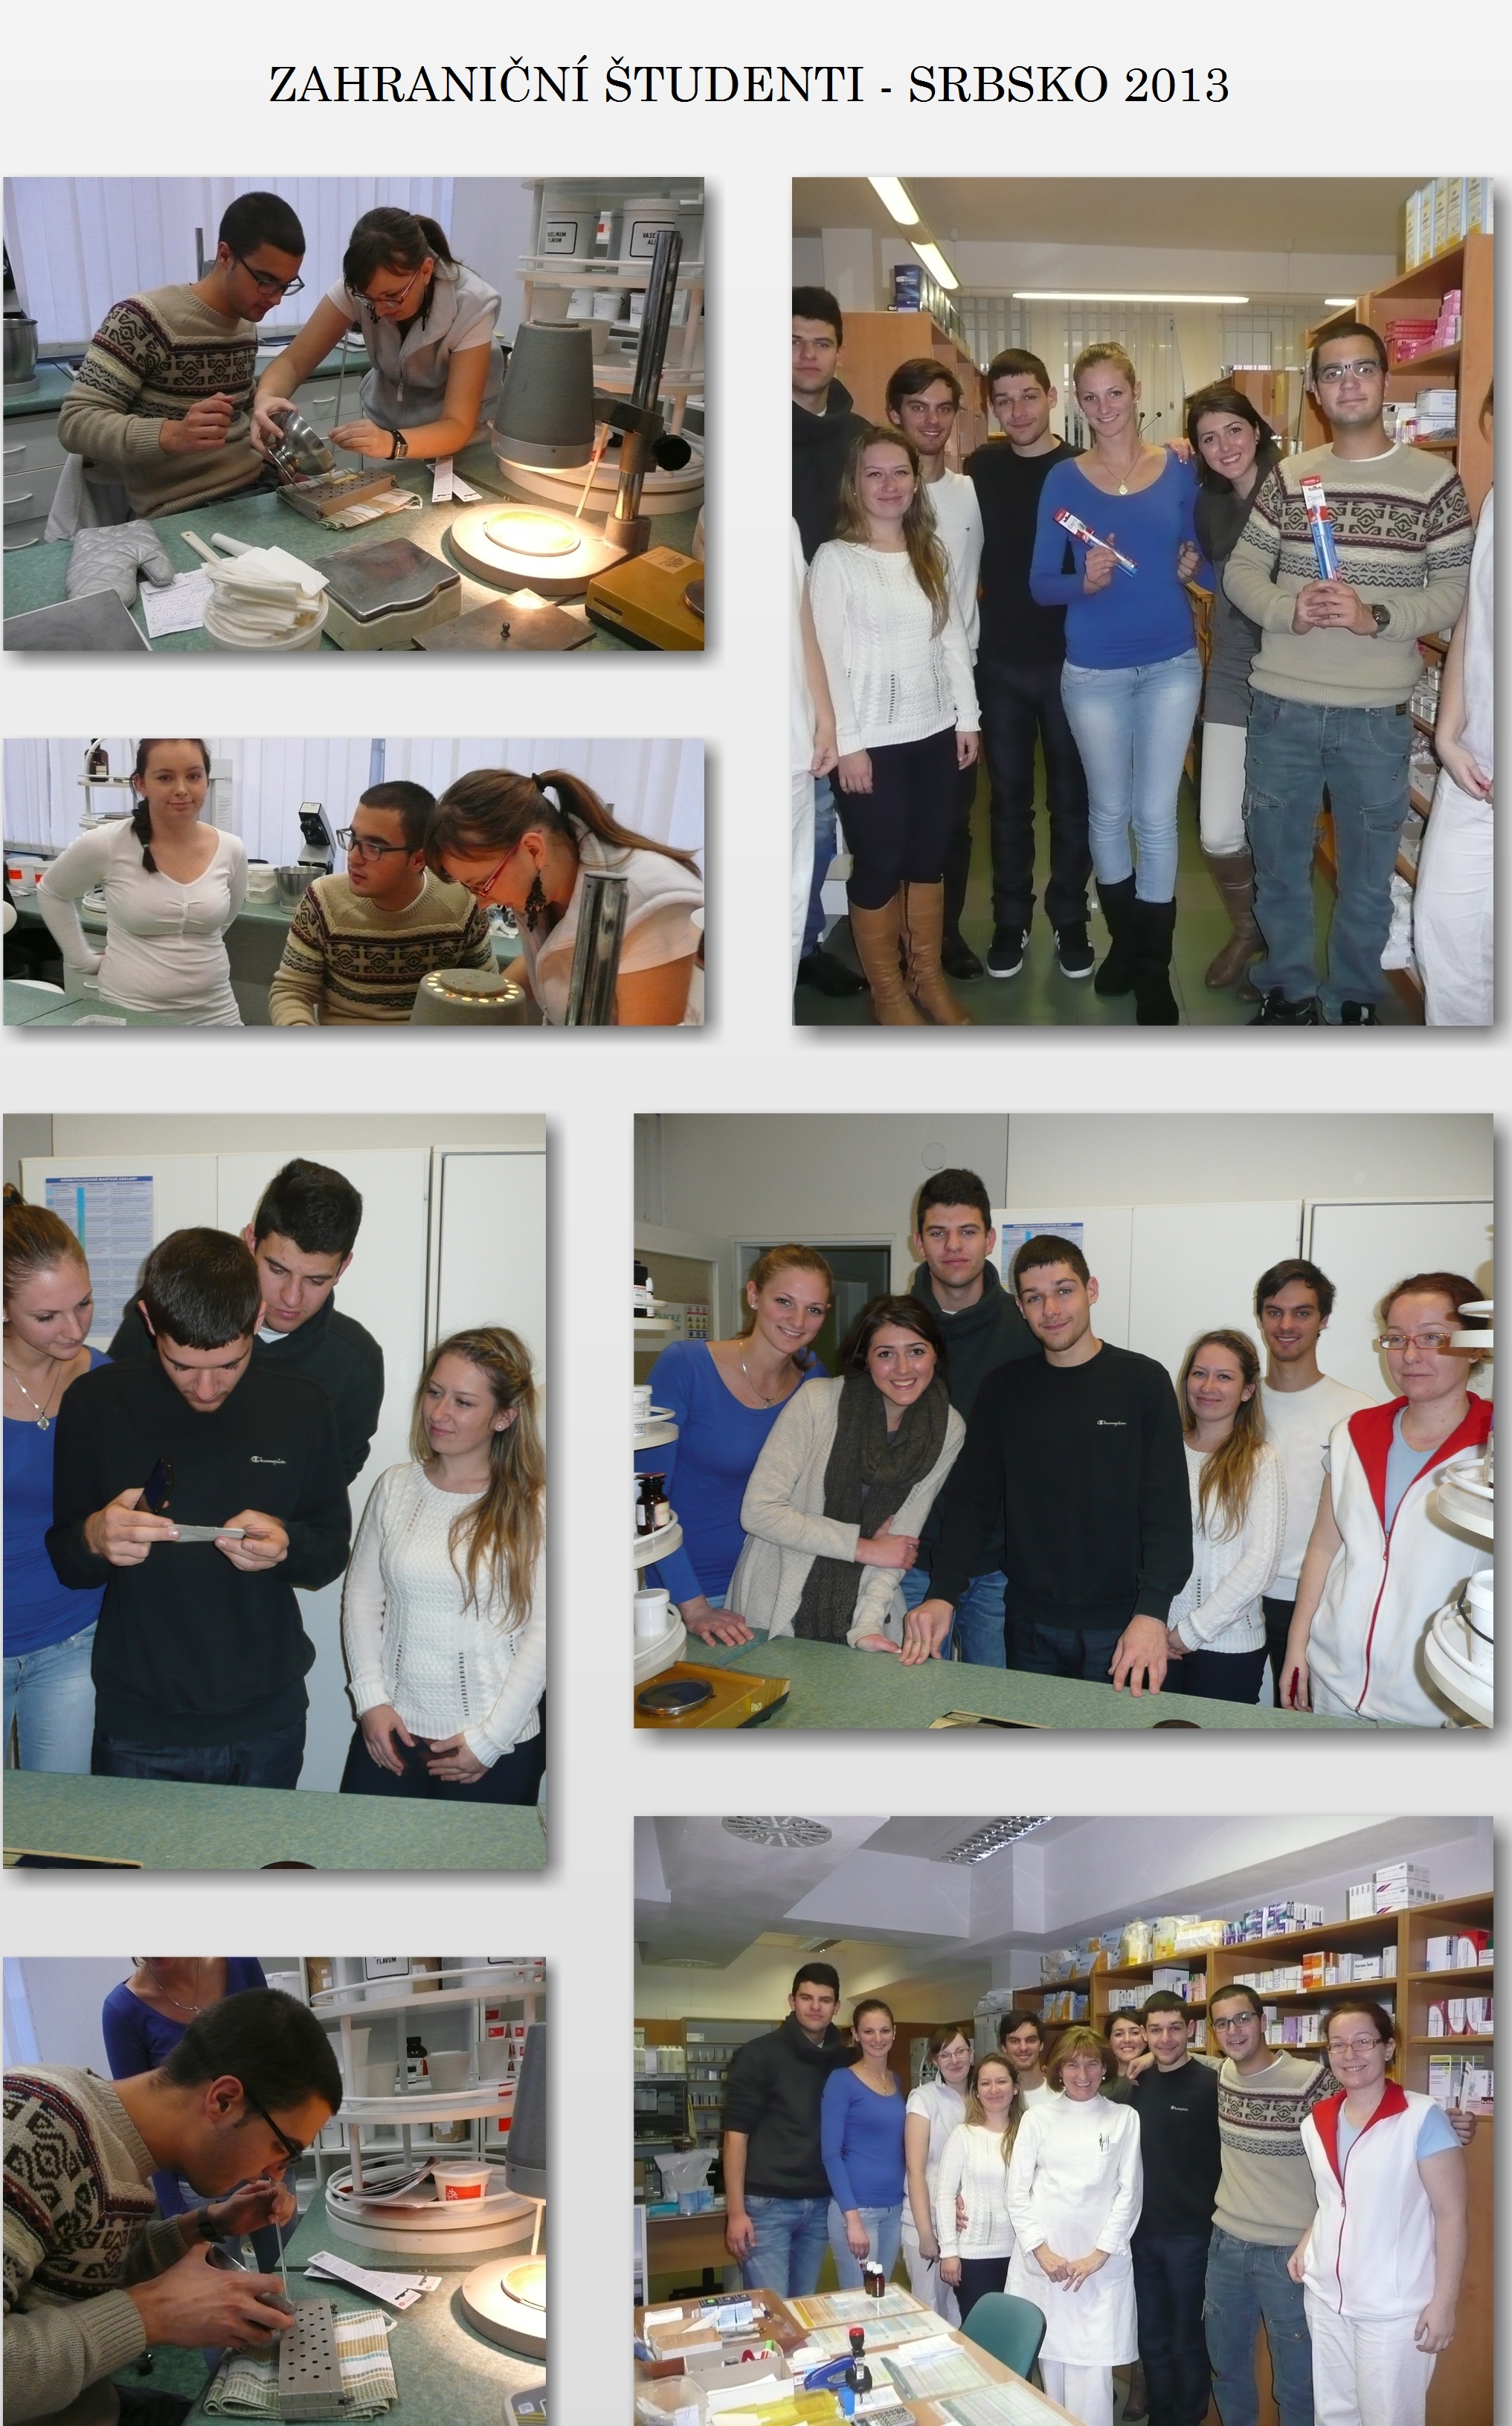 Zahraniční študenti Srbsko